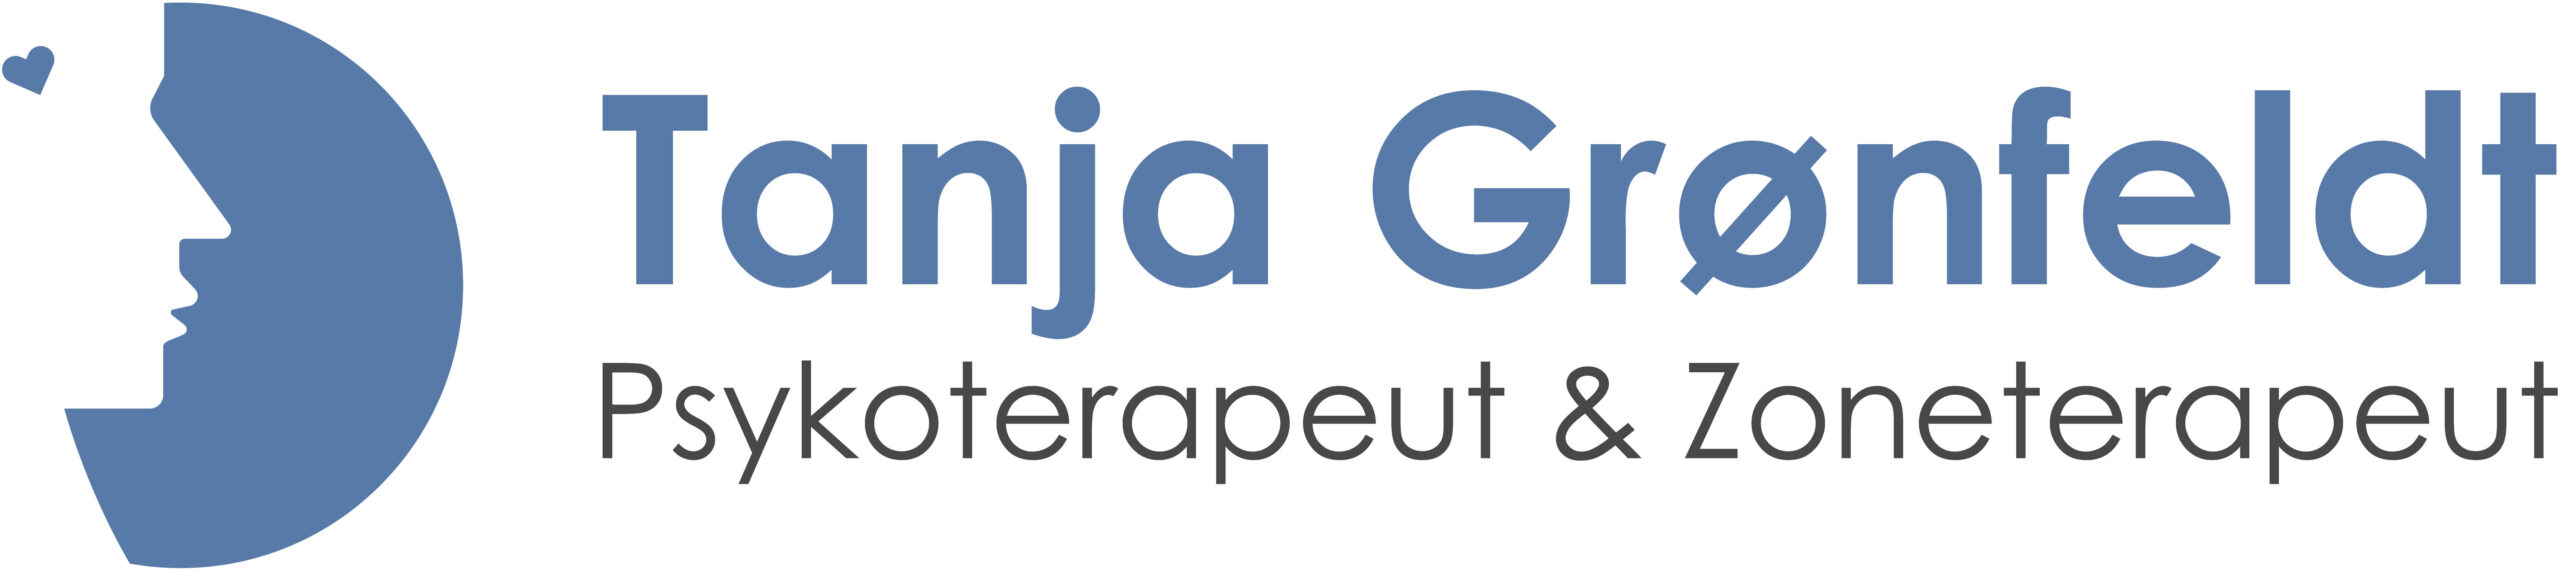 Tanja Grønfeldt logo